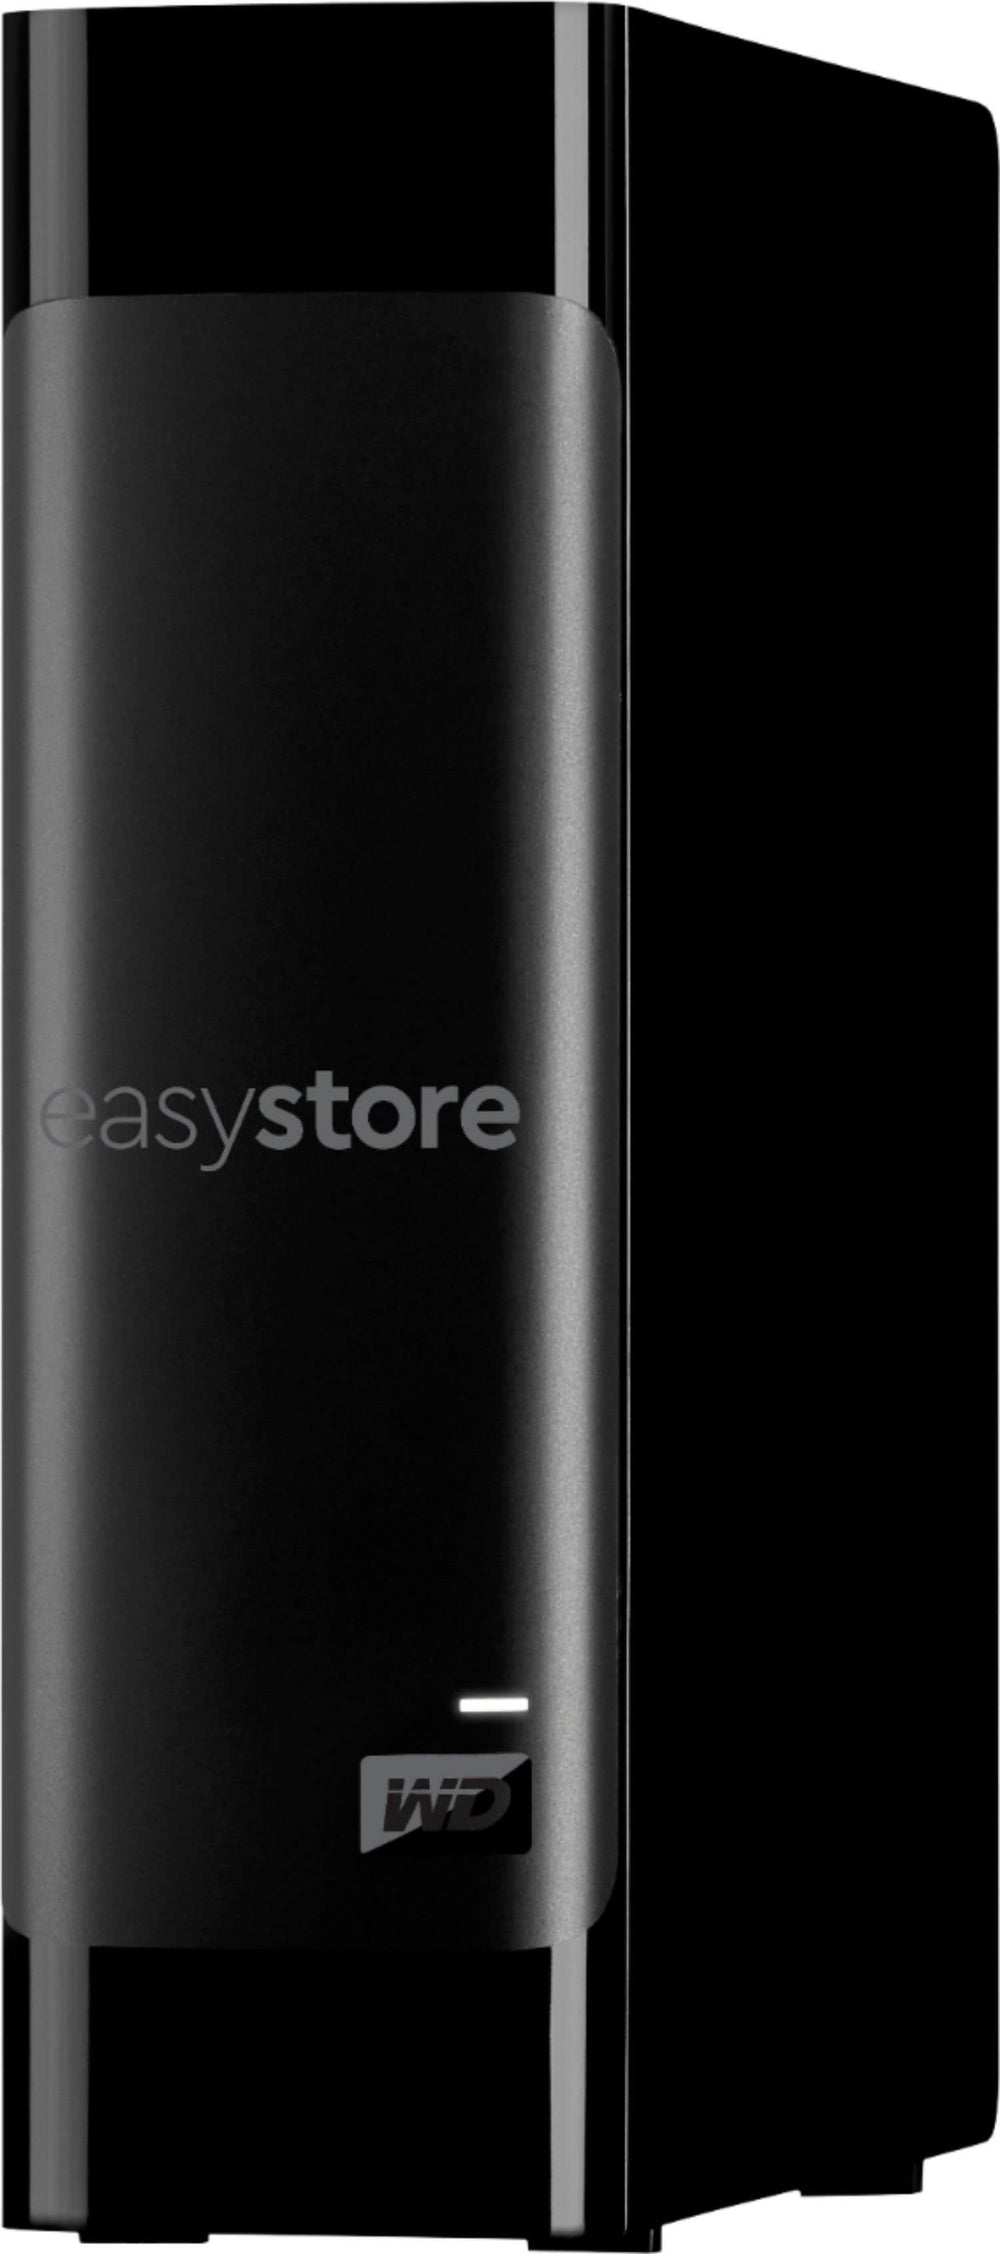 WD - easystore 16TB External USB 3.0 Hard Drive - Black_1